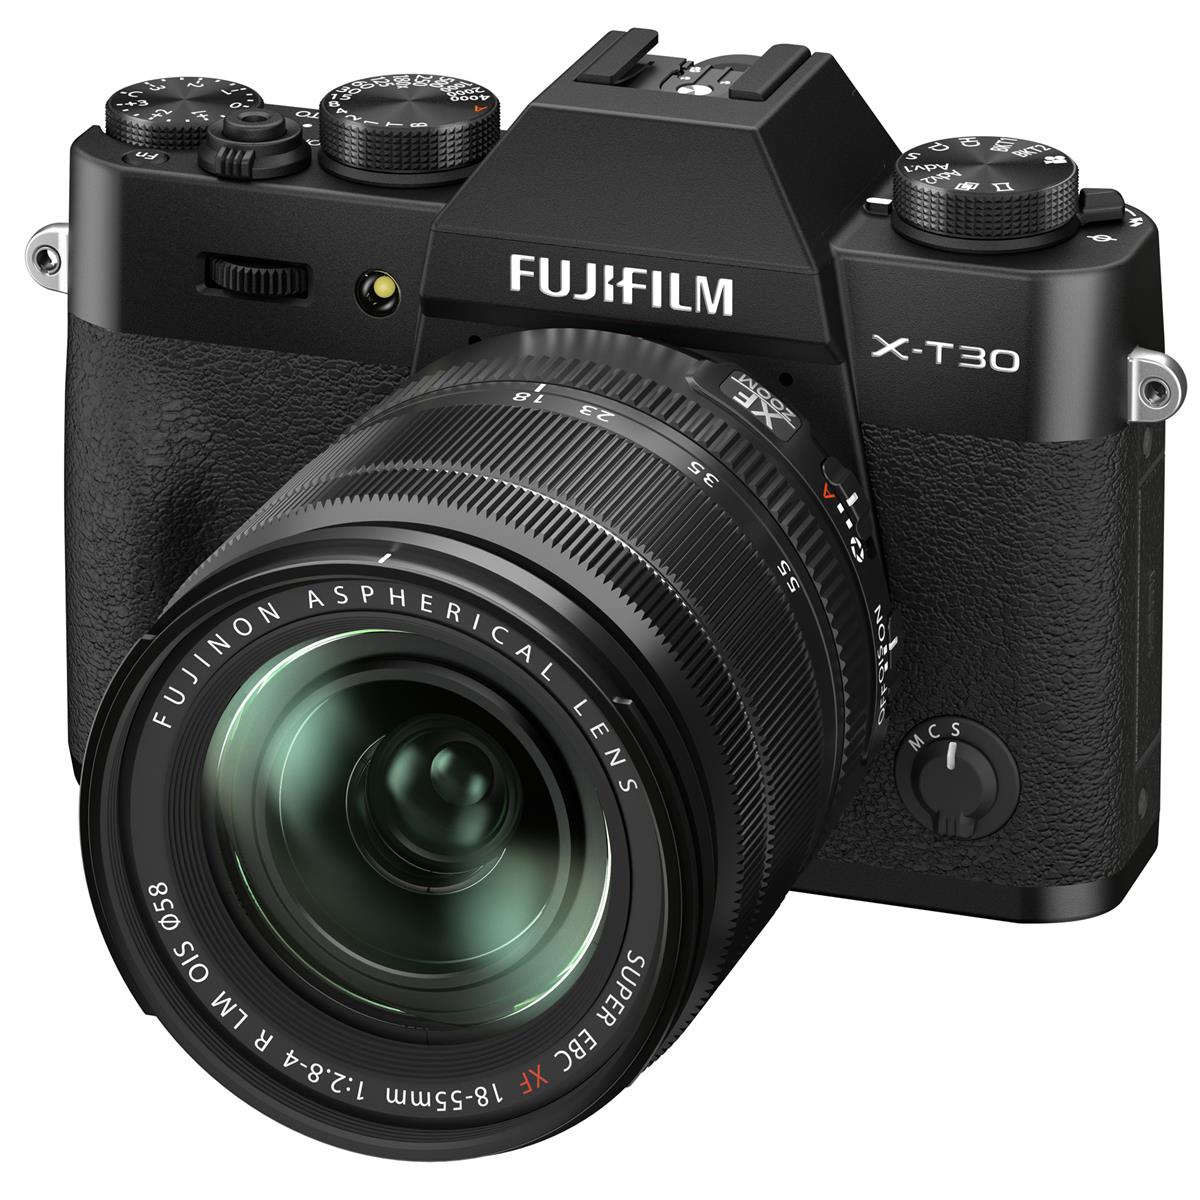 Image of Fujifilm X-T30 II Mirrorless Digital Camera with XF 18-55mm f/2.8 Lens